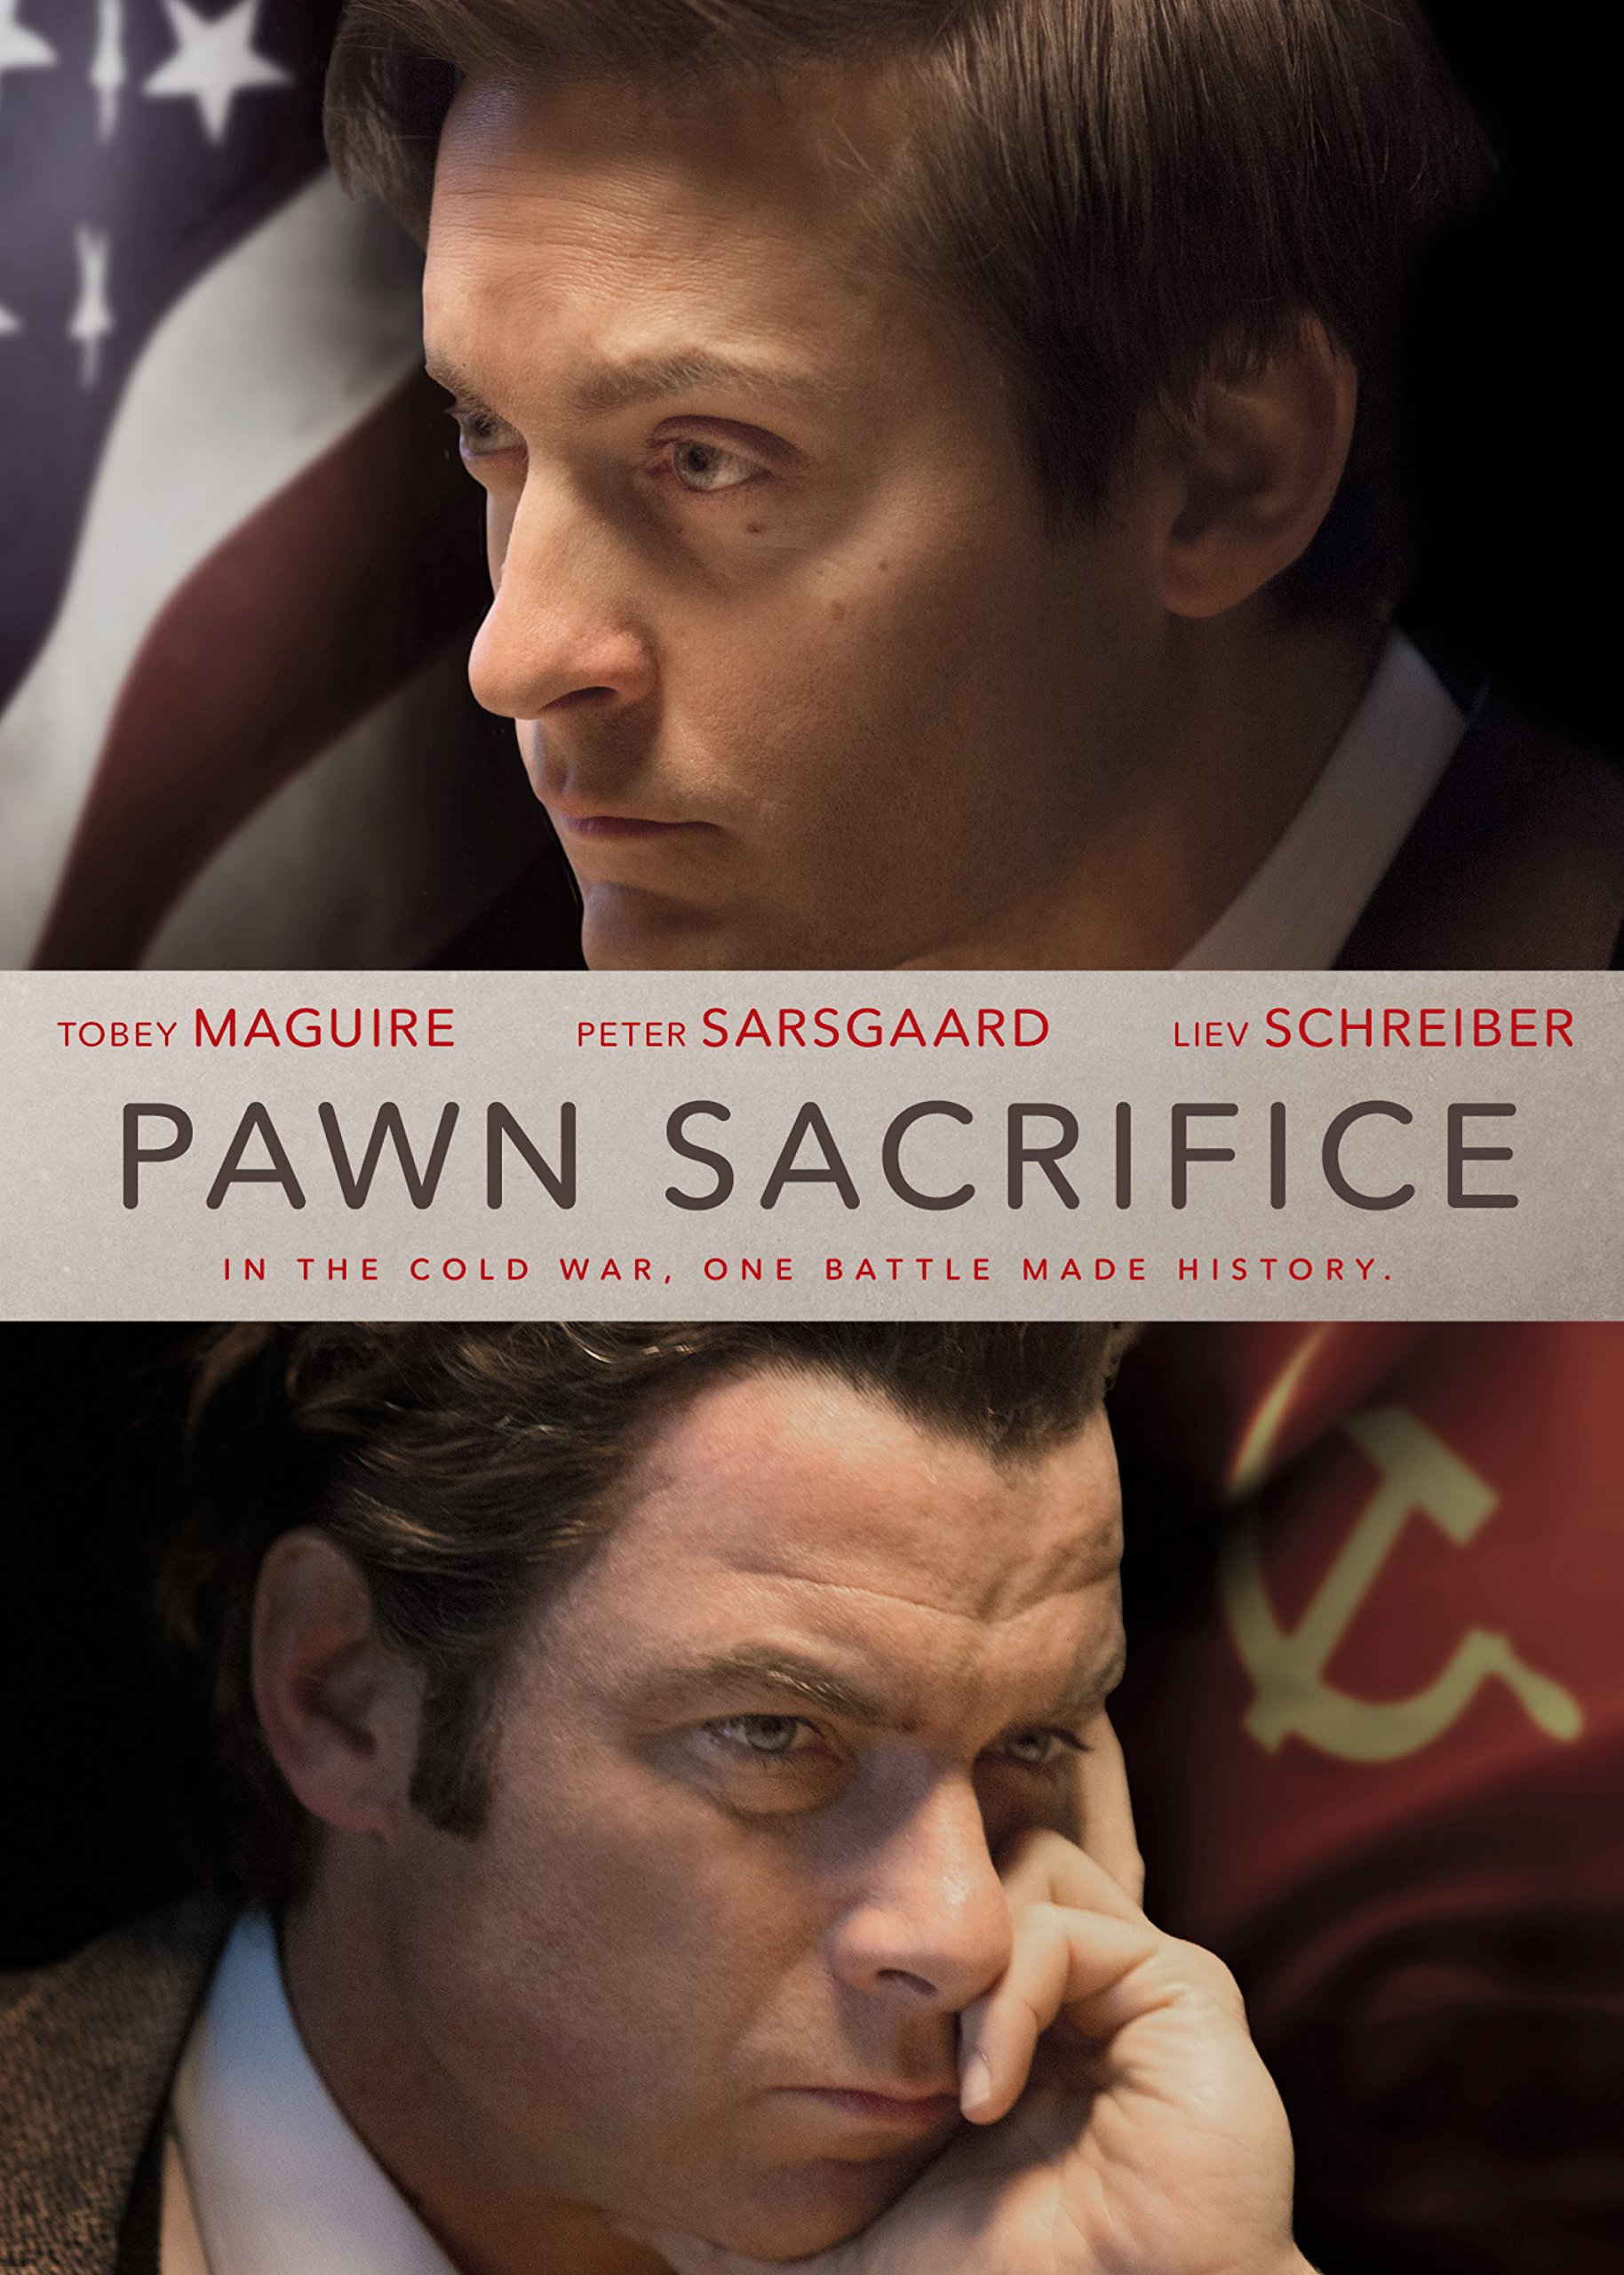 Pawn sacrifice release date